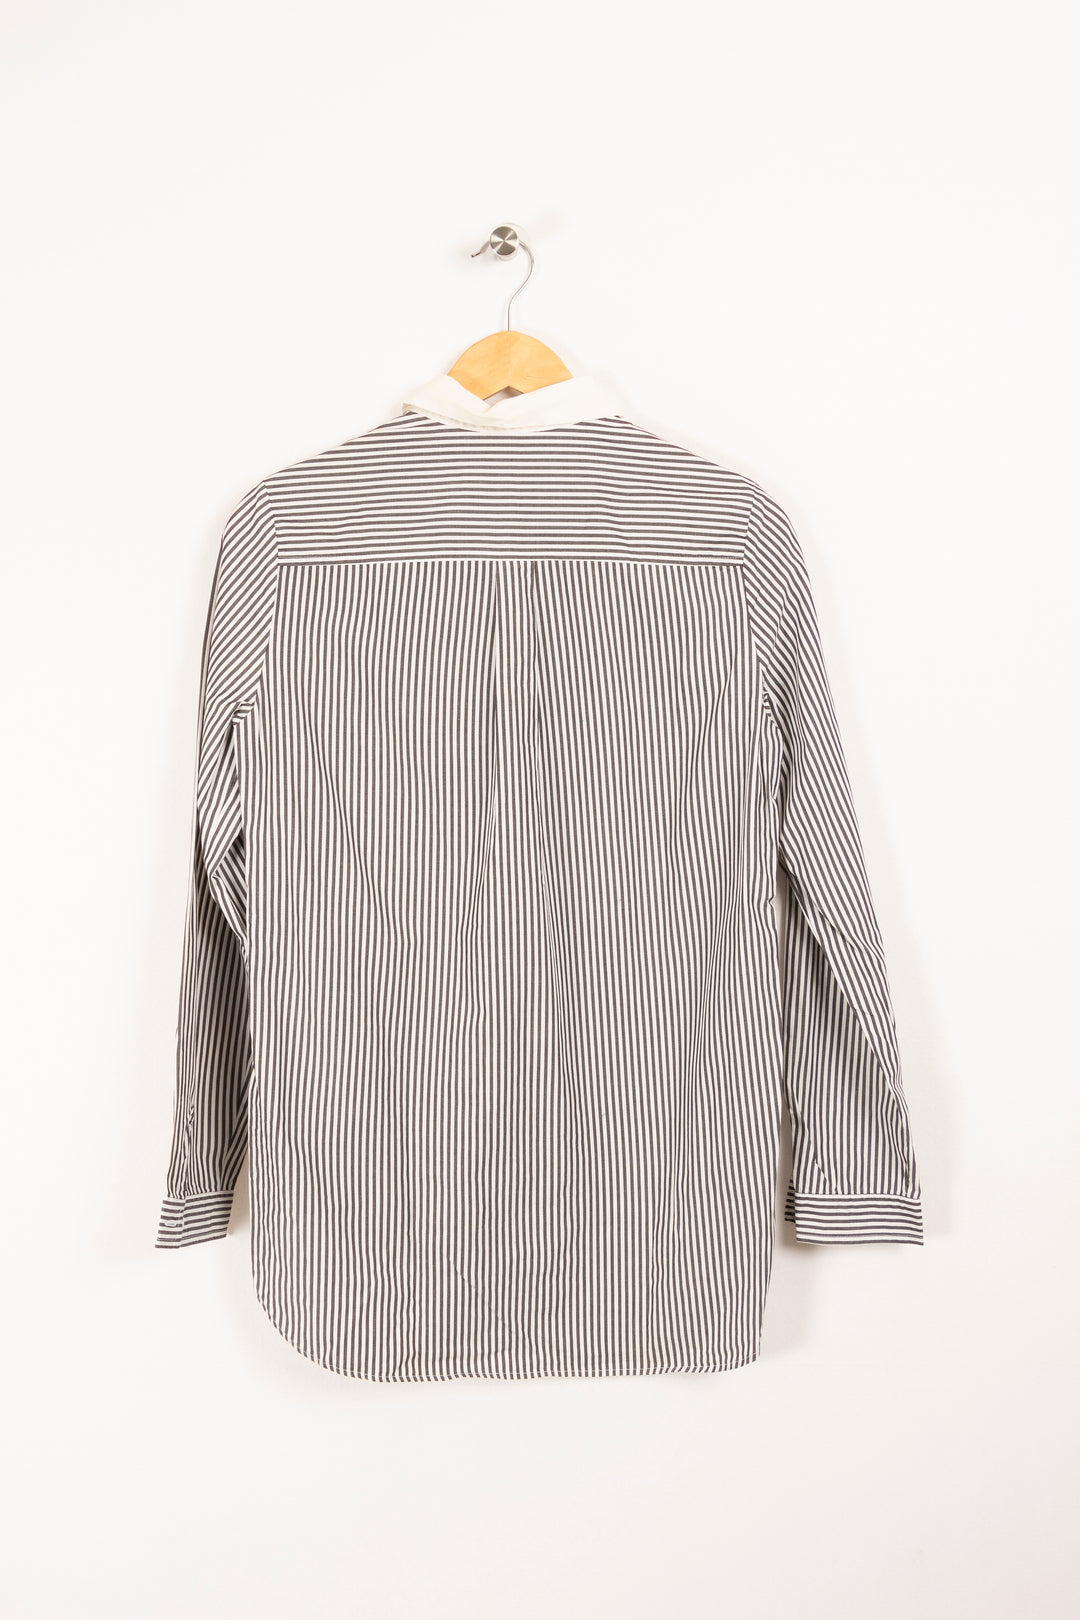 Vertical striped shirt- Size M / 38